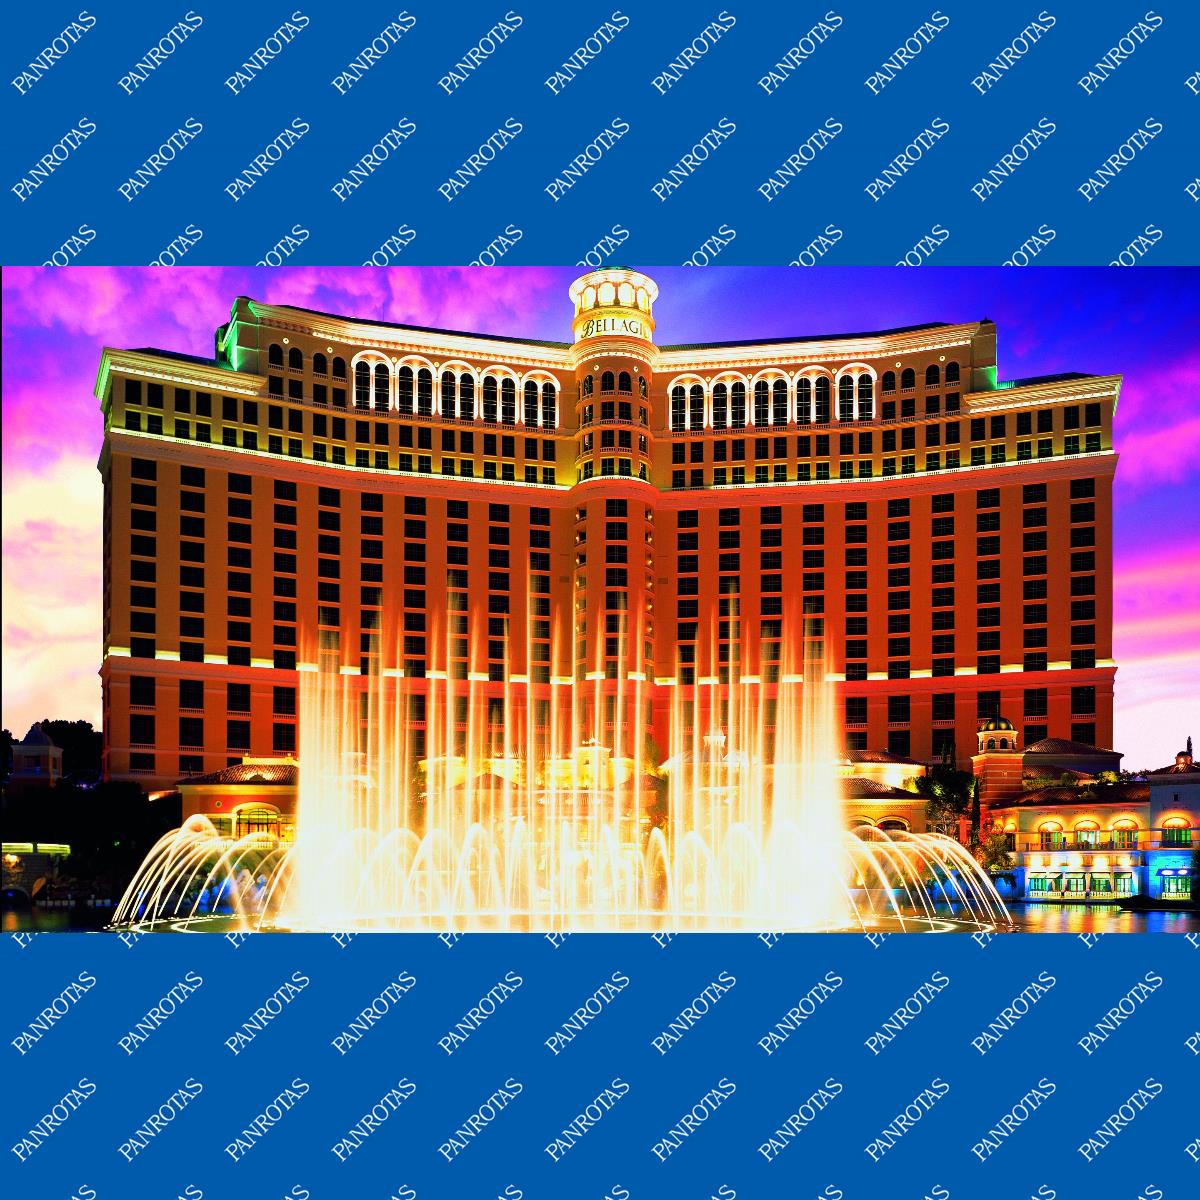 Las Vegas Poker - Click Jogos